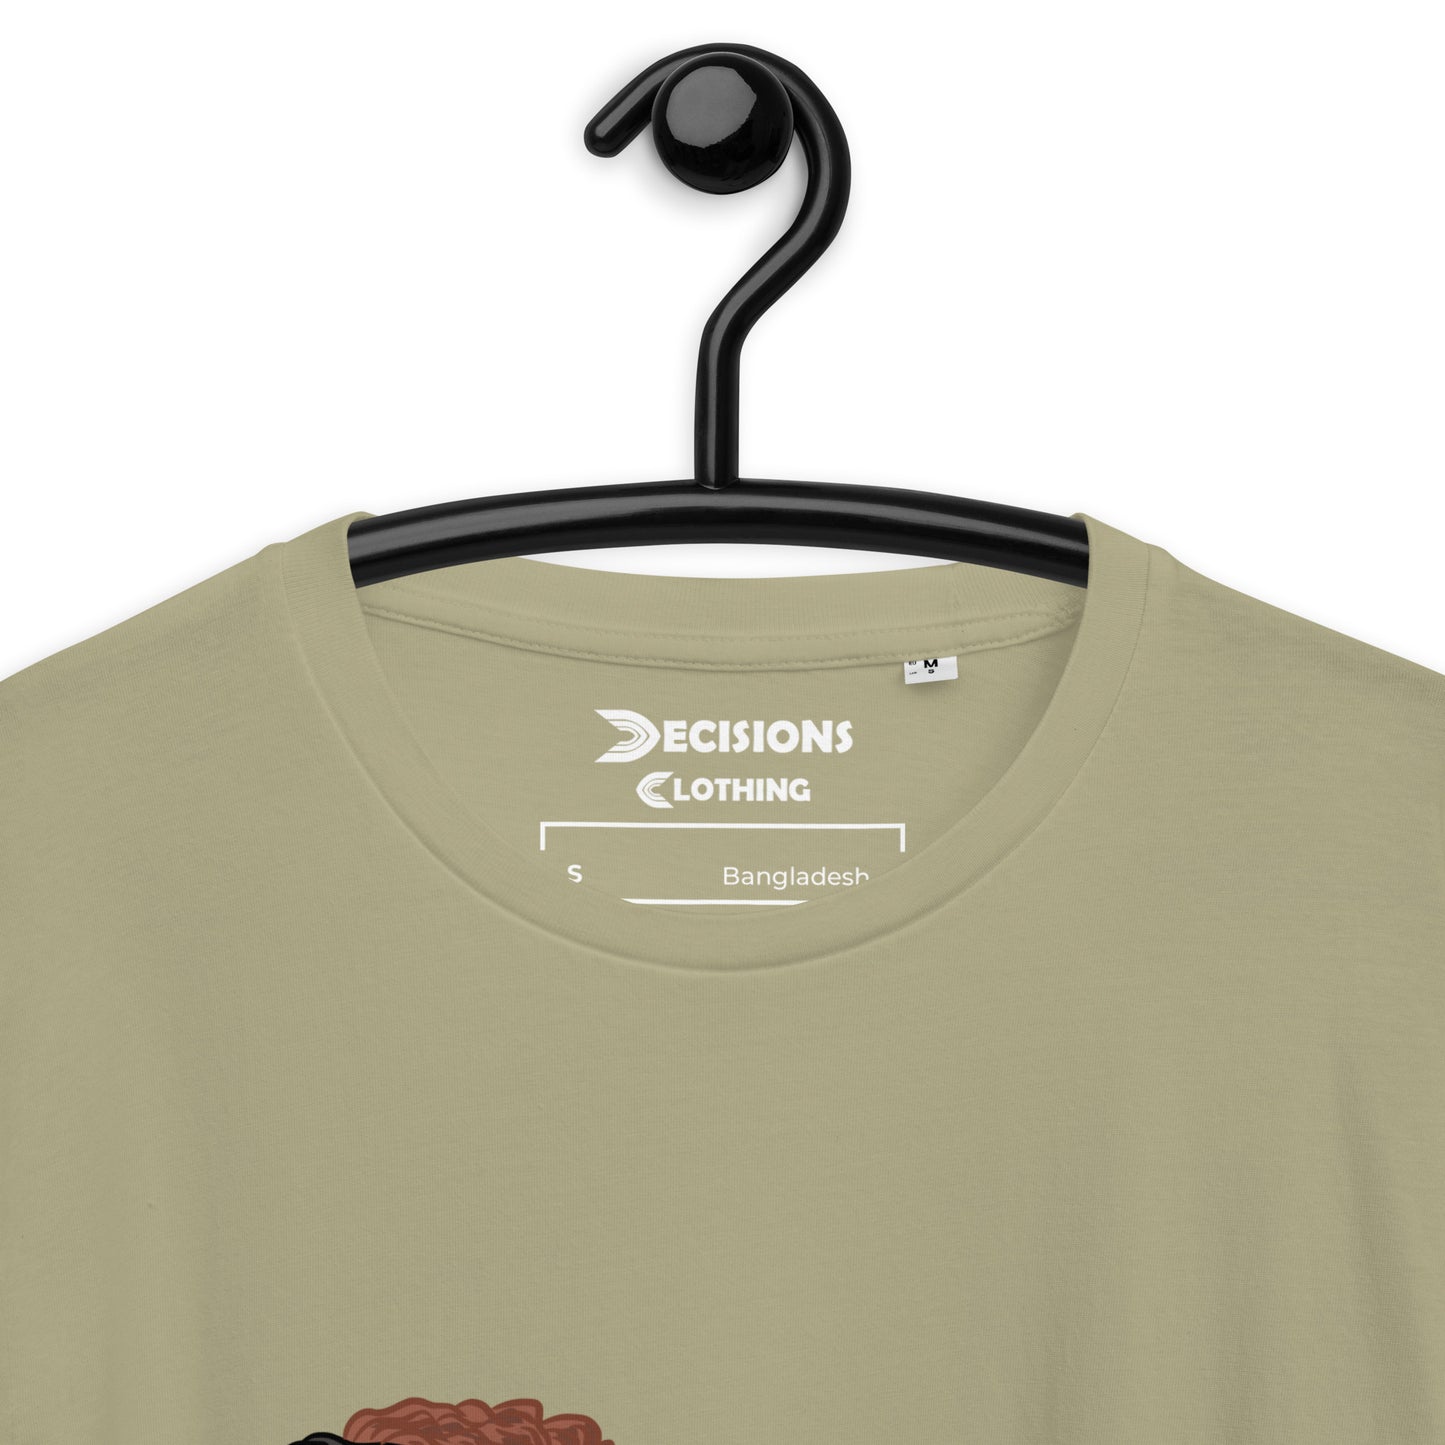 Horizon Nessie T-Shirt (Apex Legends)